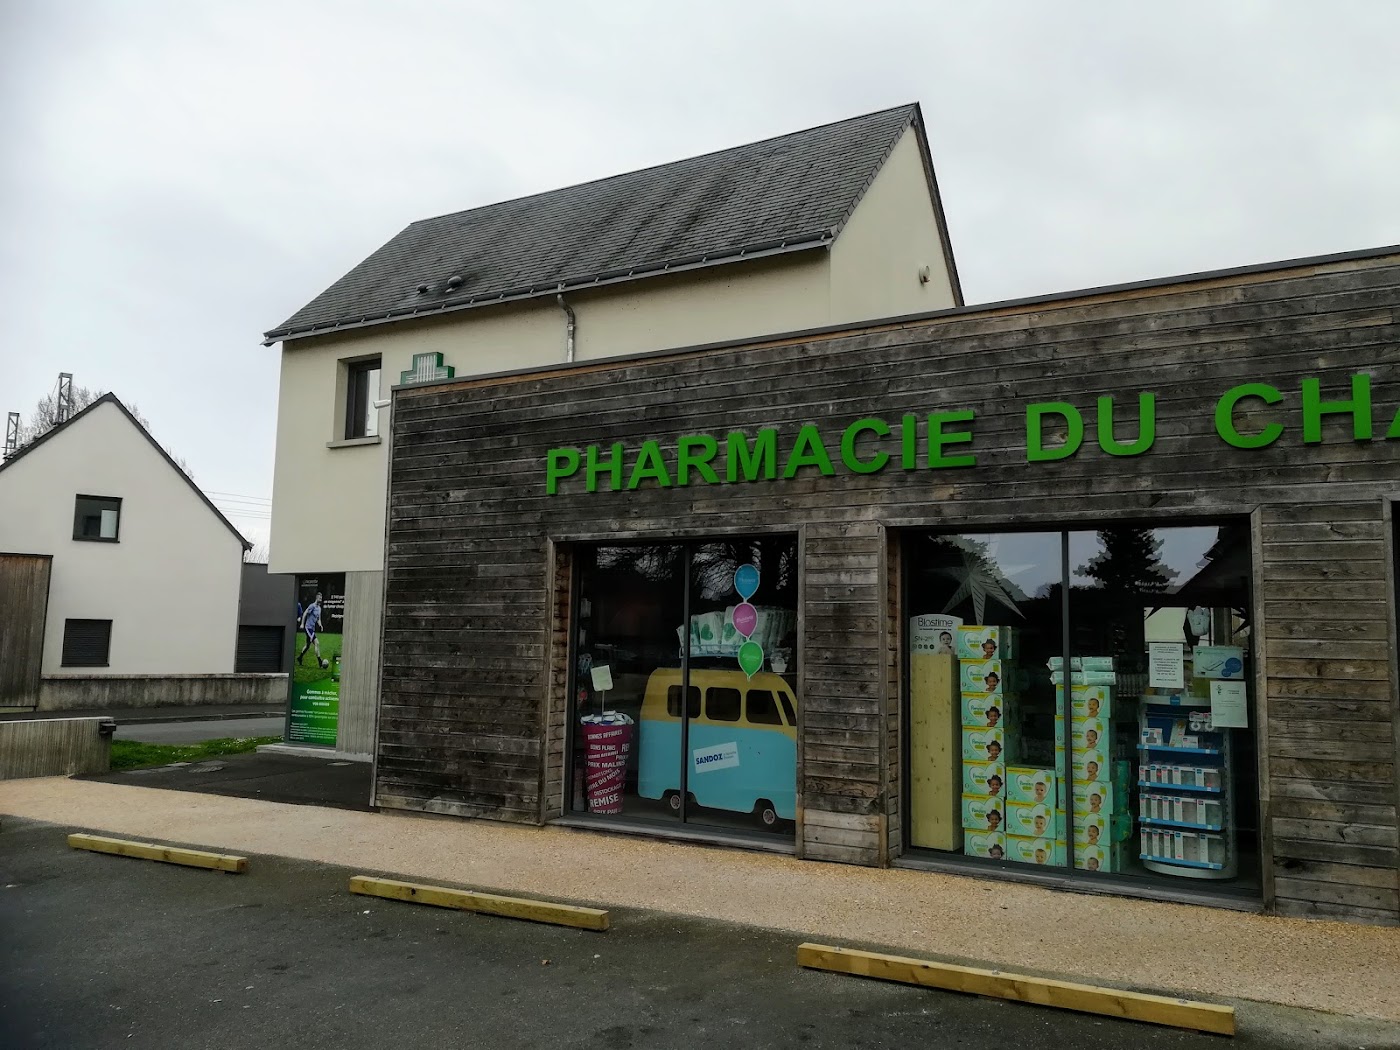 Pharmacie du Château- Le Bourg